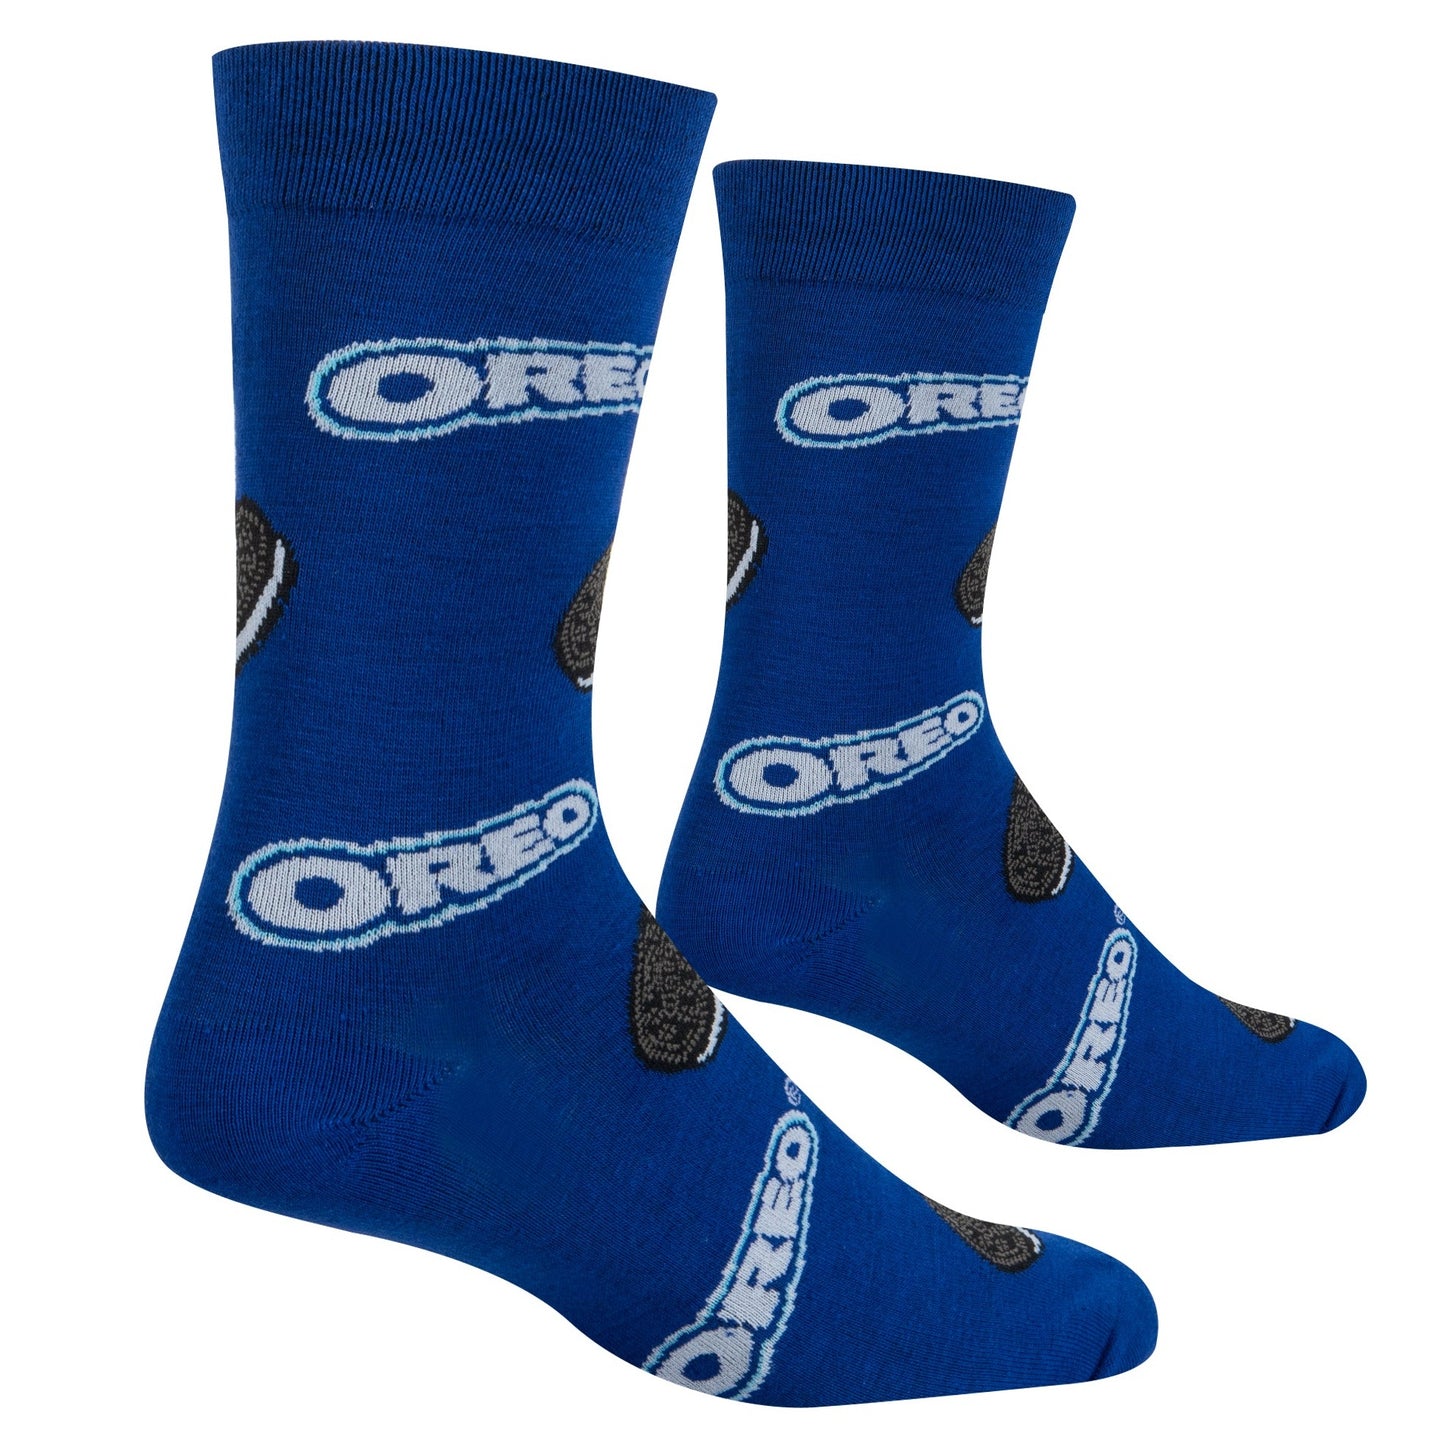 Oreo Cookies Women's Socks